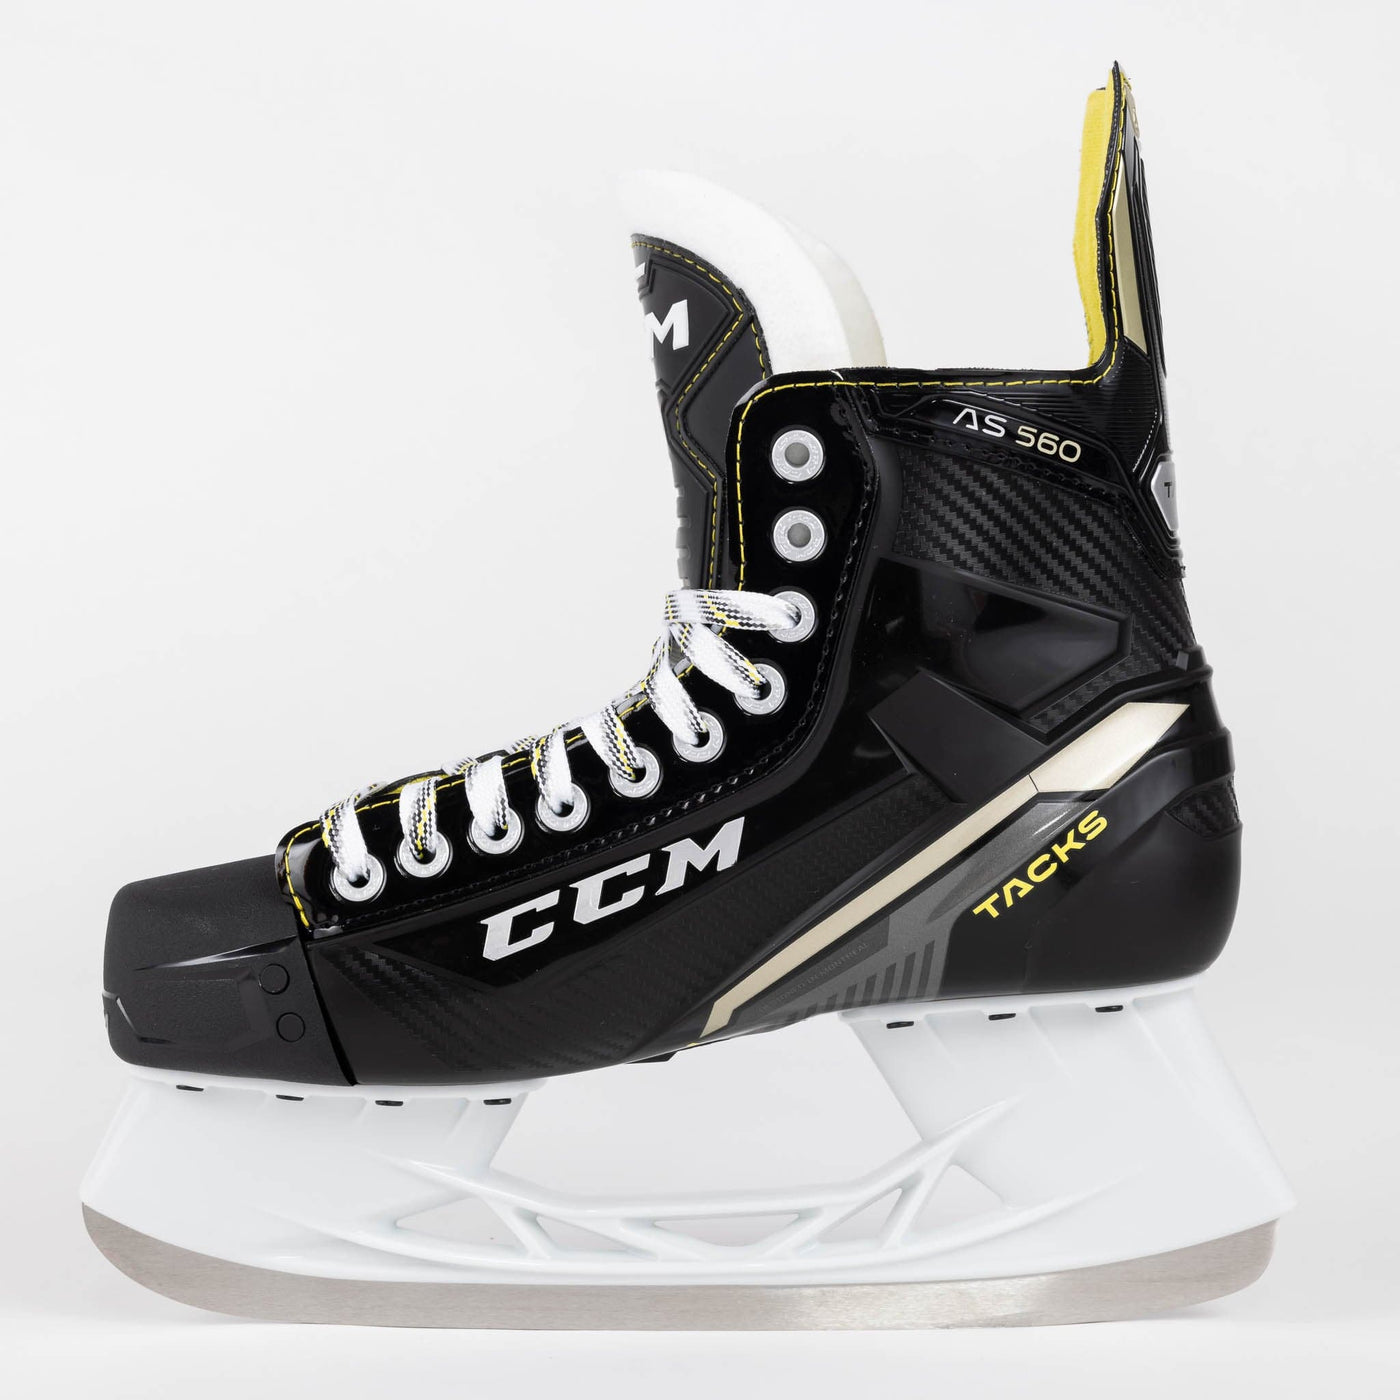 CCM Tacks AS560 Senior Hockey Skates - The Hockey Shop Source For Sports